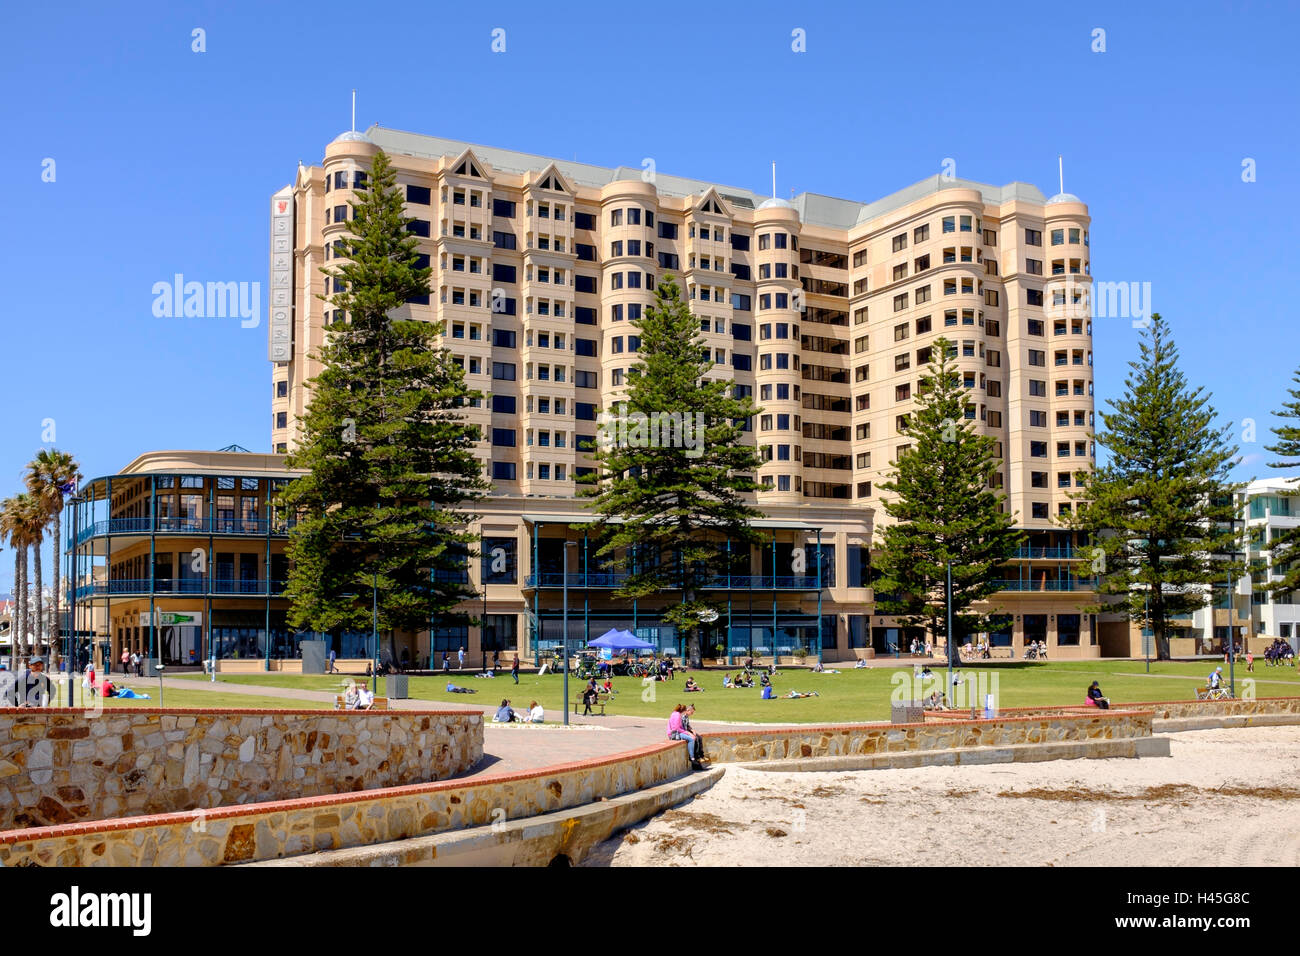 Glenelg, South Australia populärsten Strand-Entertainment-Bereich. Stockfoto